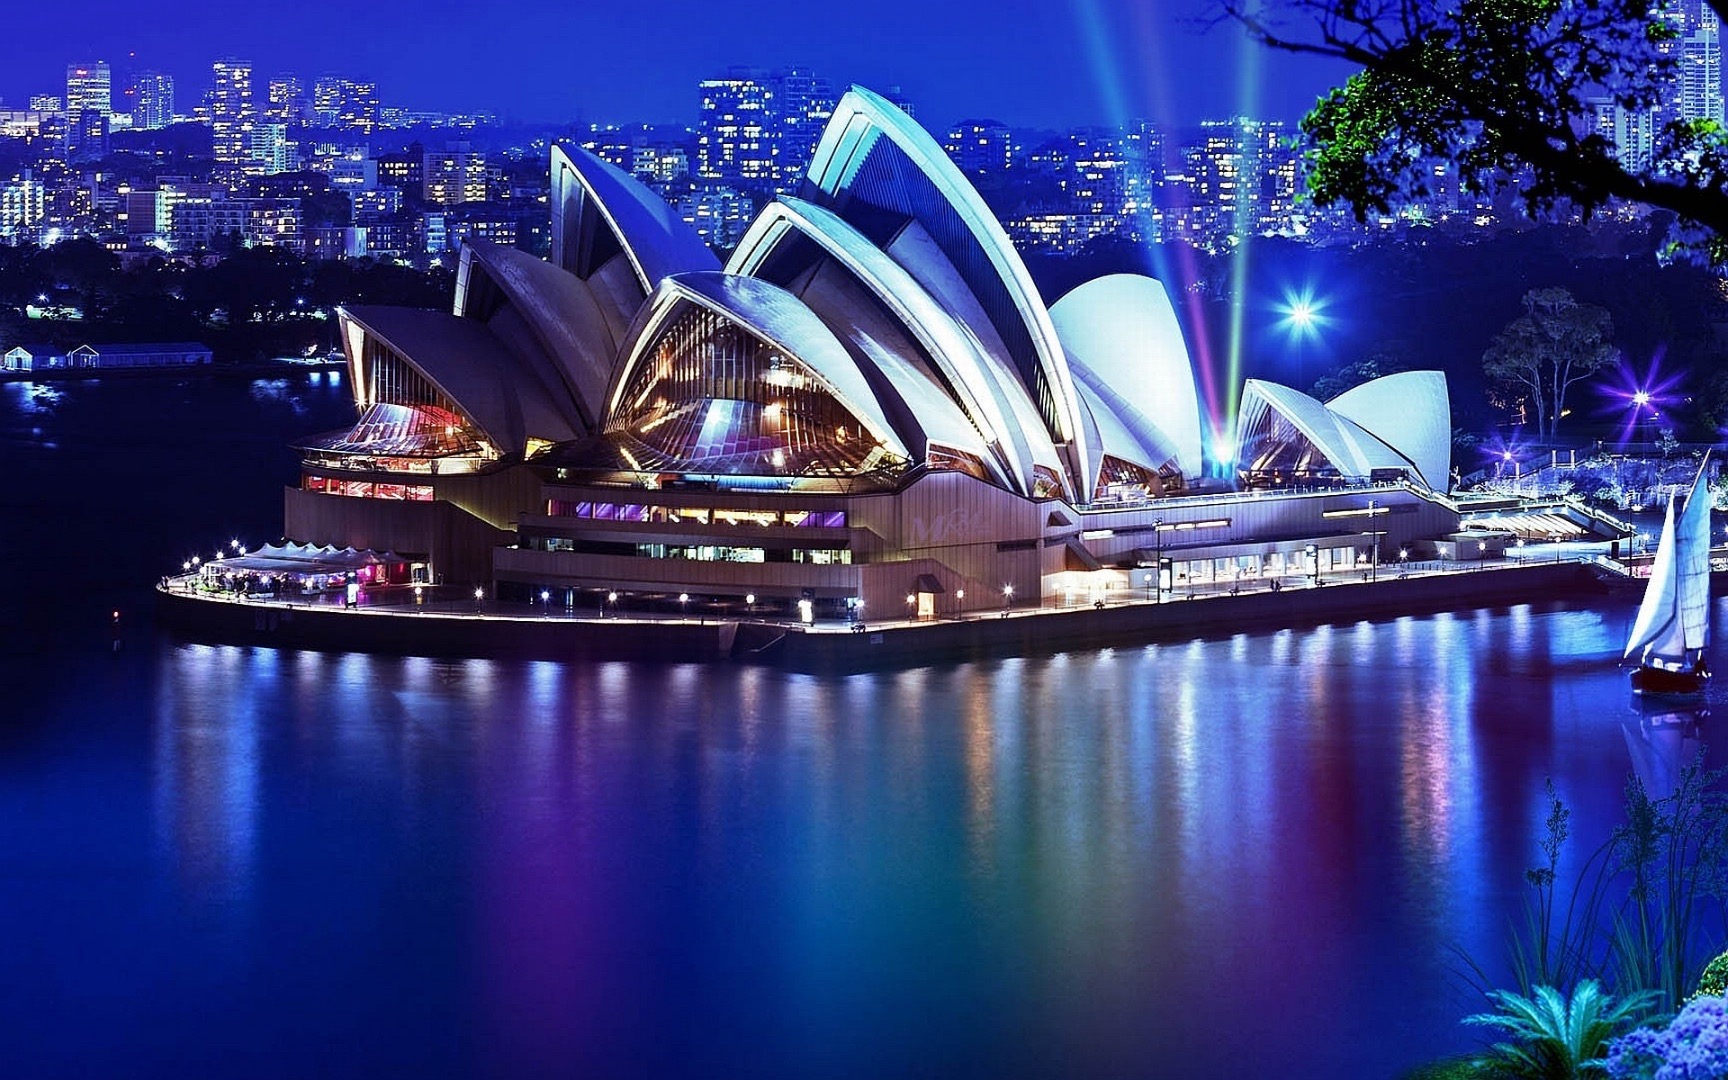 Tour du lịch Úc (8N7Đ) - Melbourne - Canberra - Sydney...